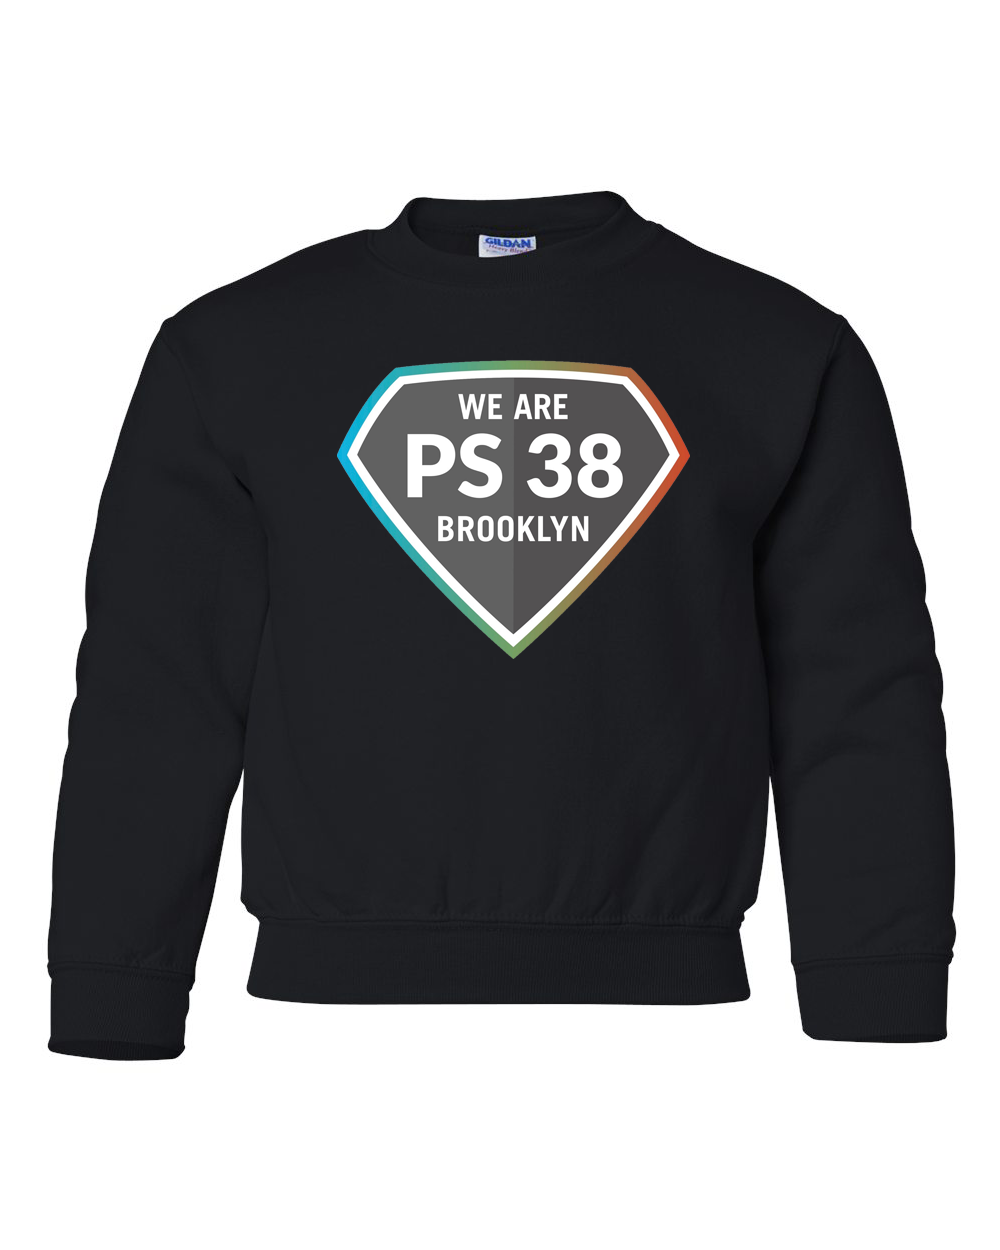 P.S. 38 : Youth Crewneck Sweatshirt